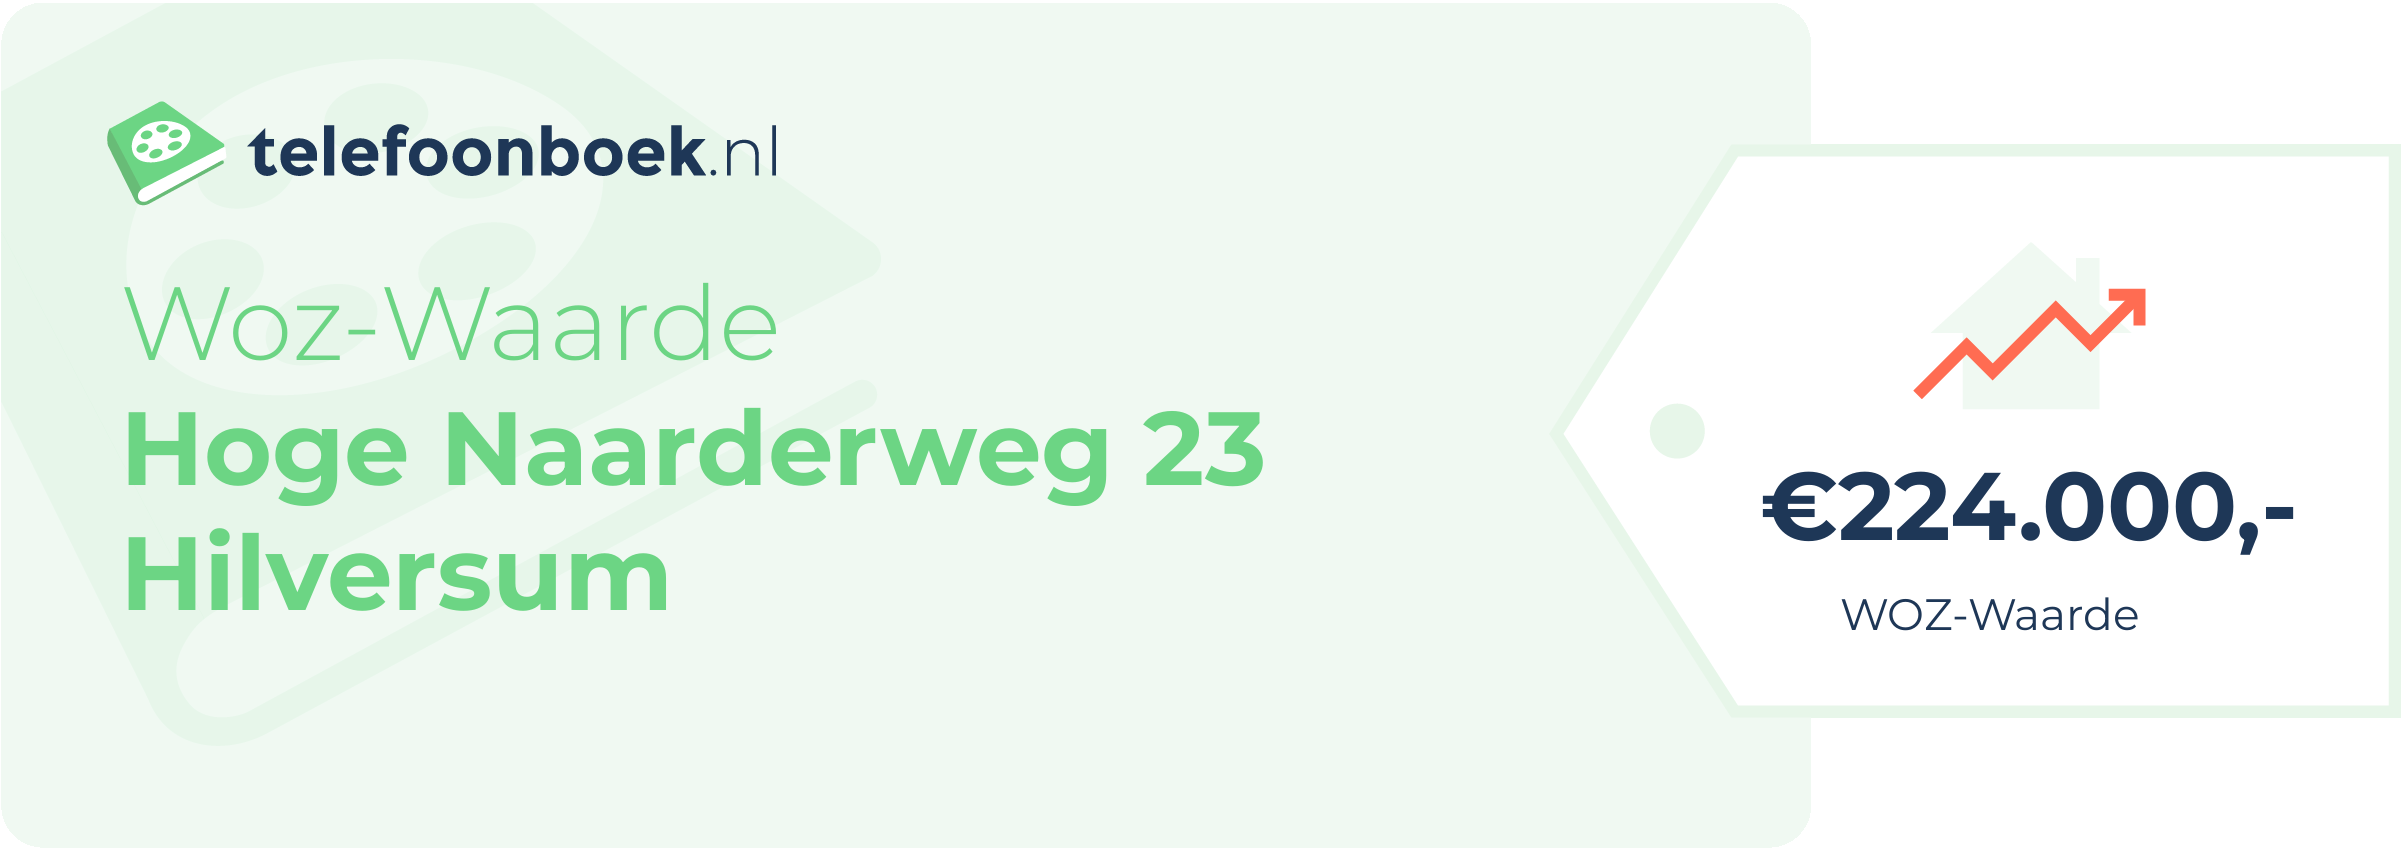 WOZ-waarde Hoge Naarderweg 23 Hilversum